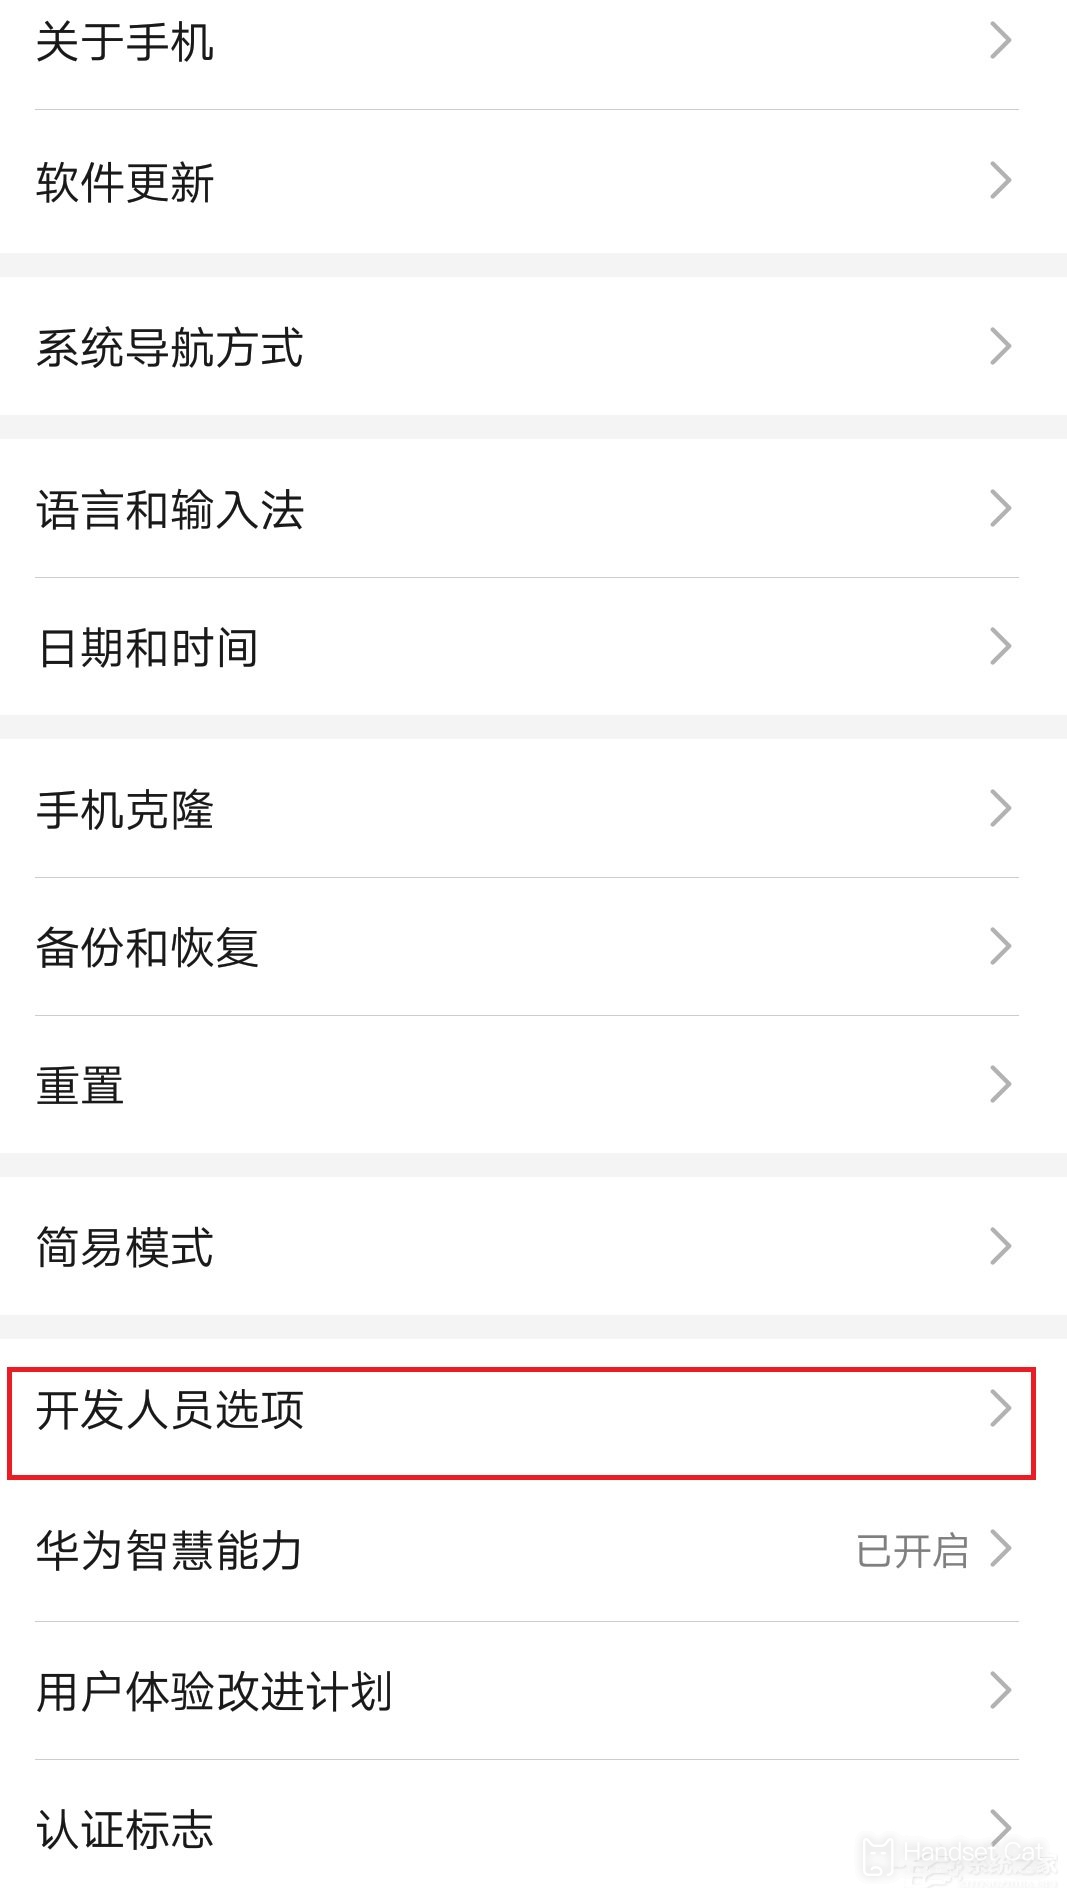 Huawei Enjoy 50 Pro에서 개발자 모드 진입에 대한 튜토리얼